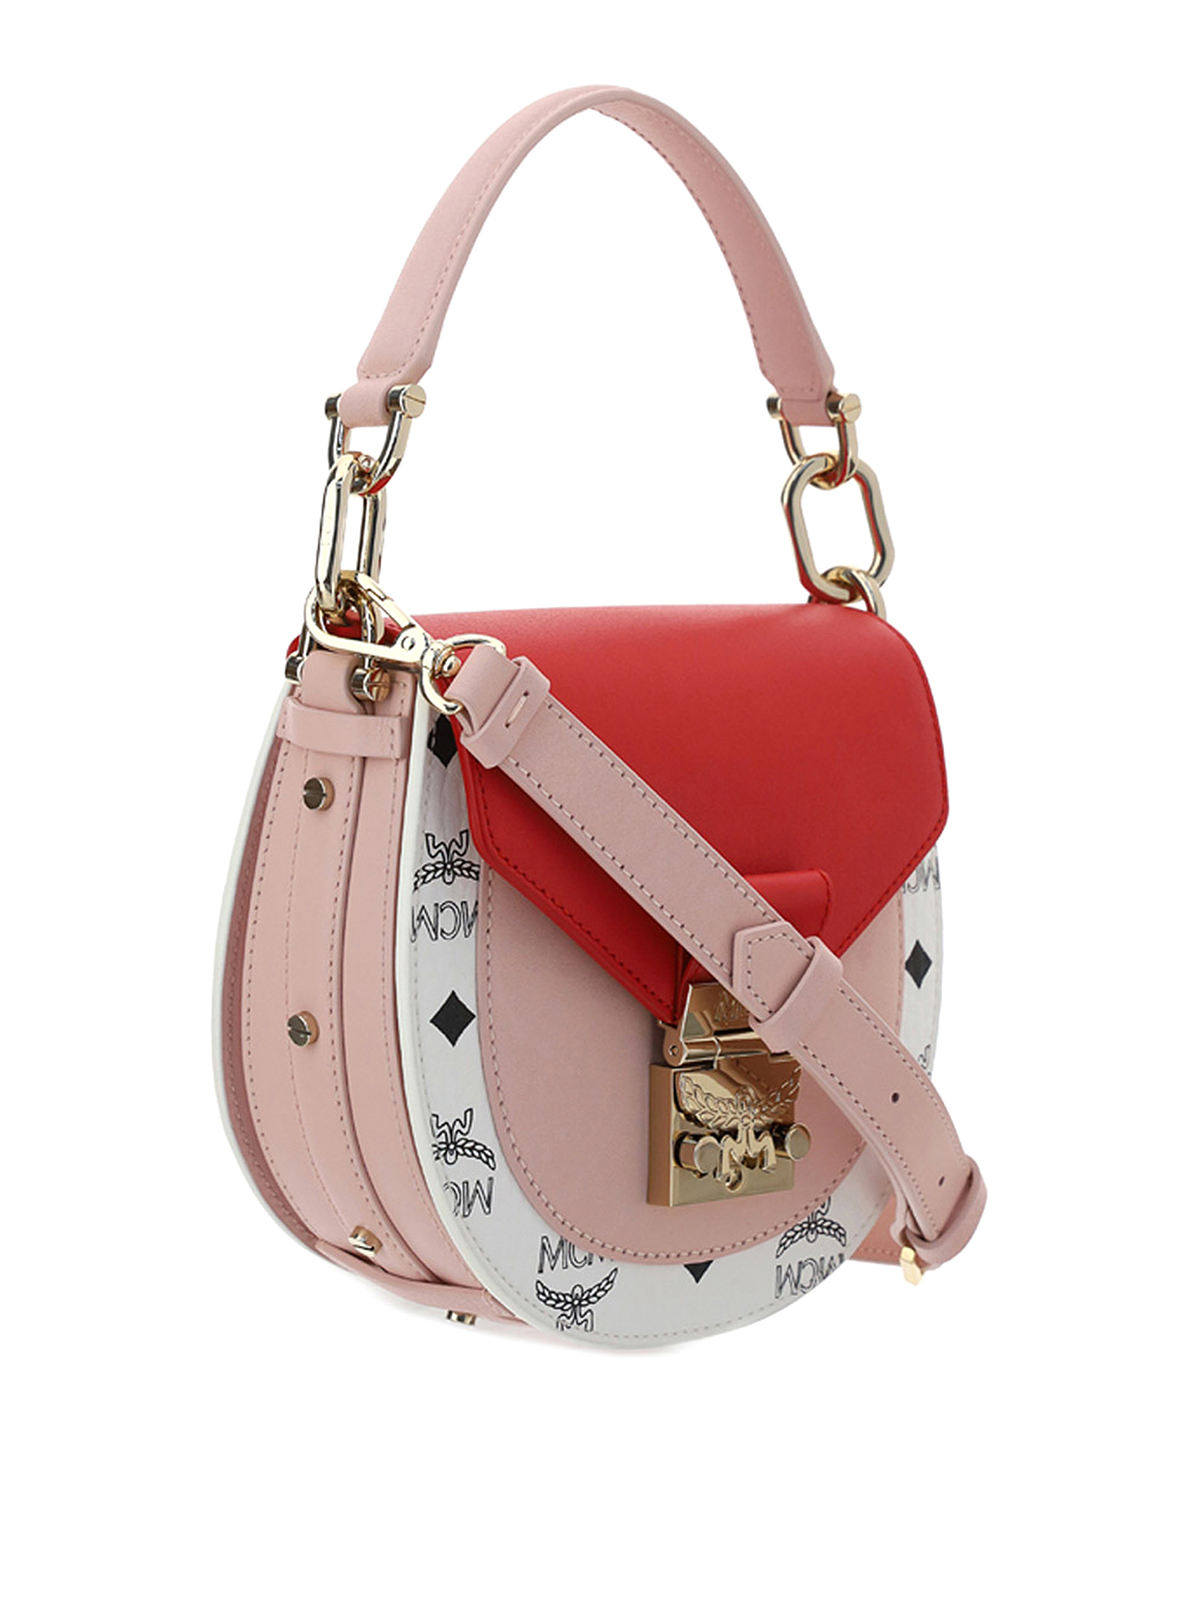 Mcm Patricia Leather Handbag